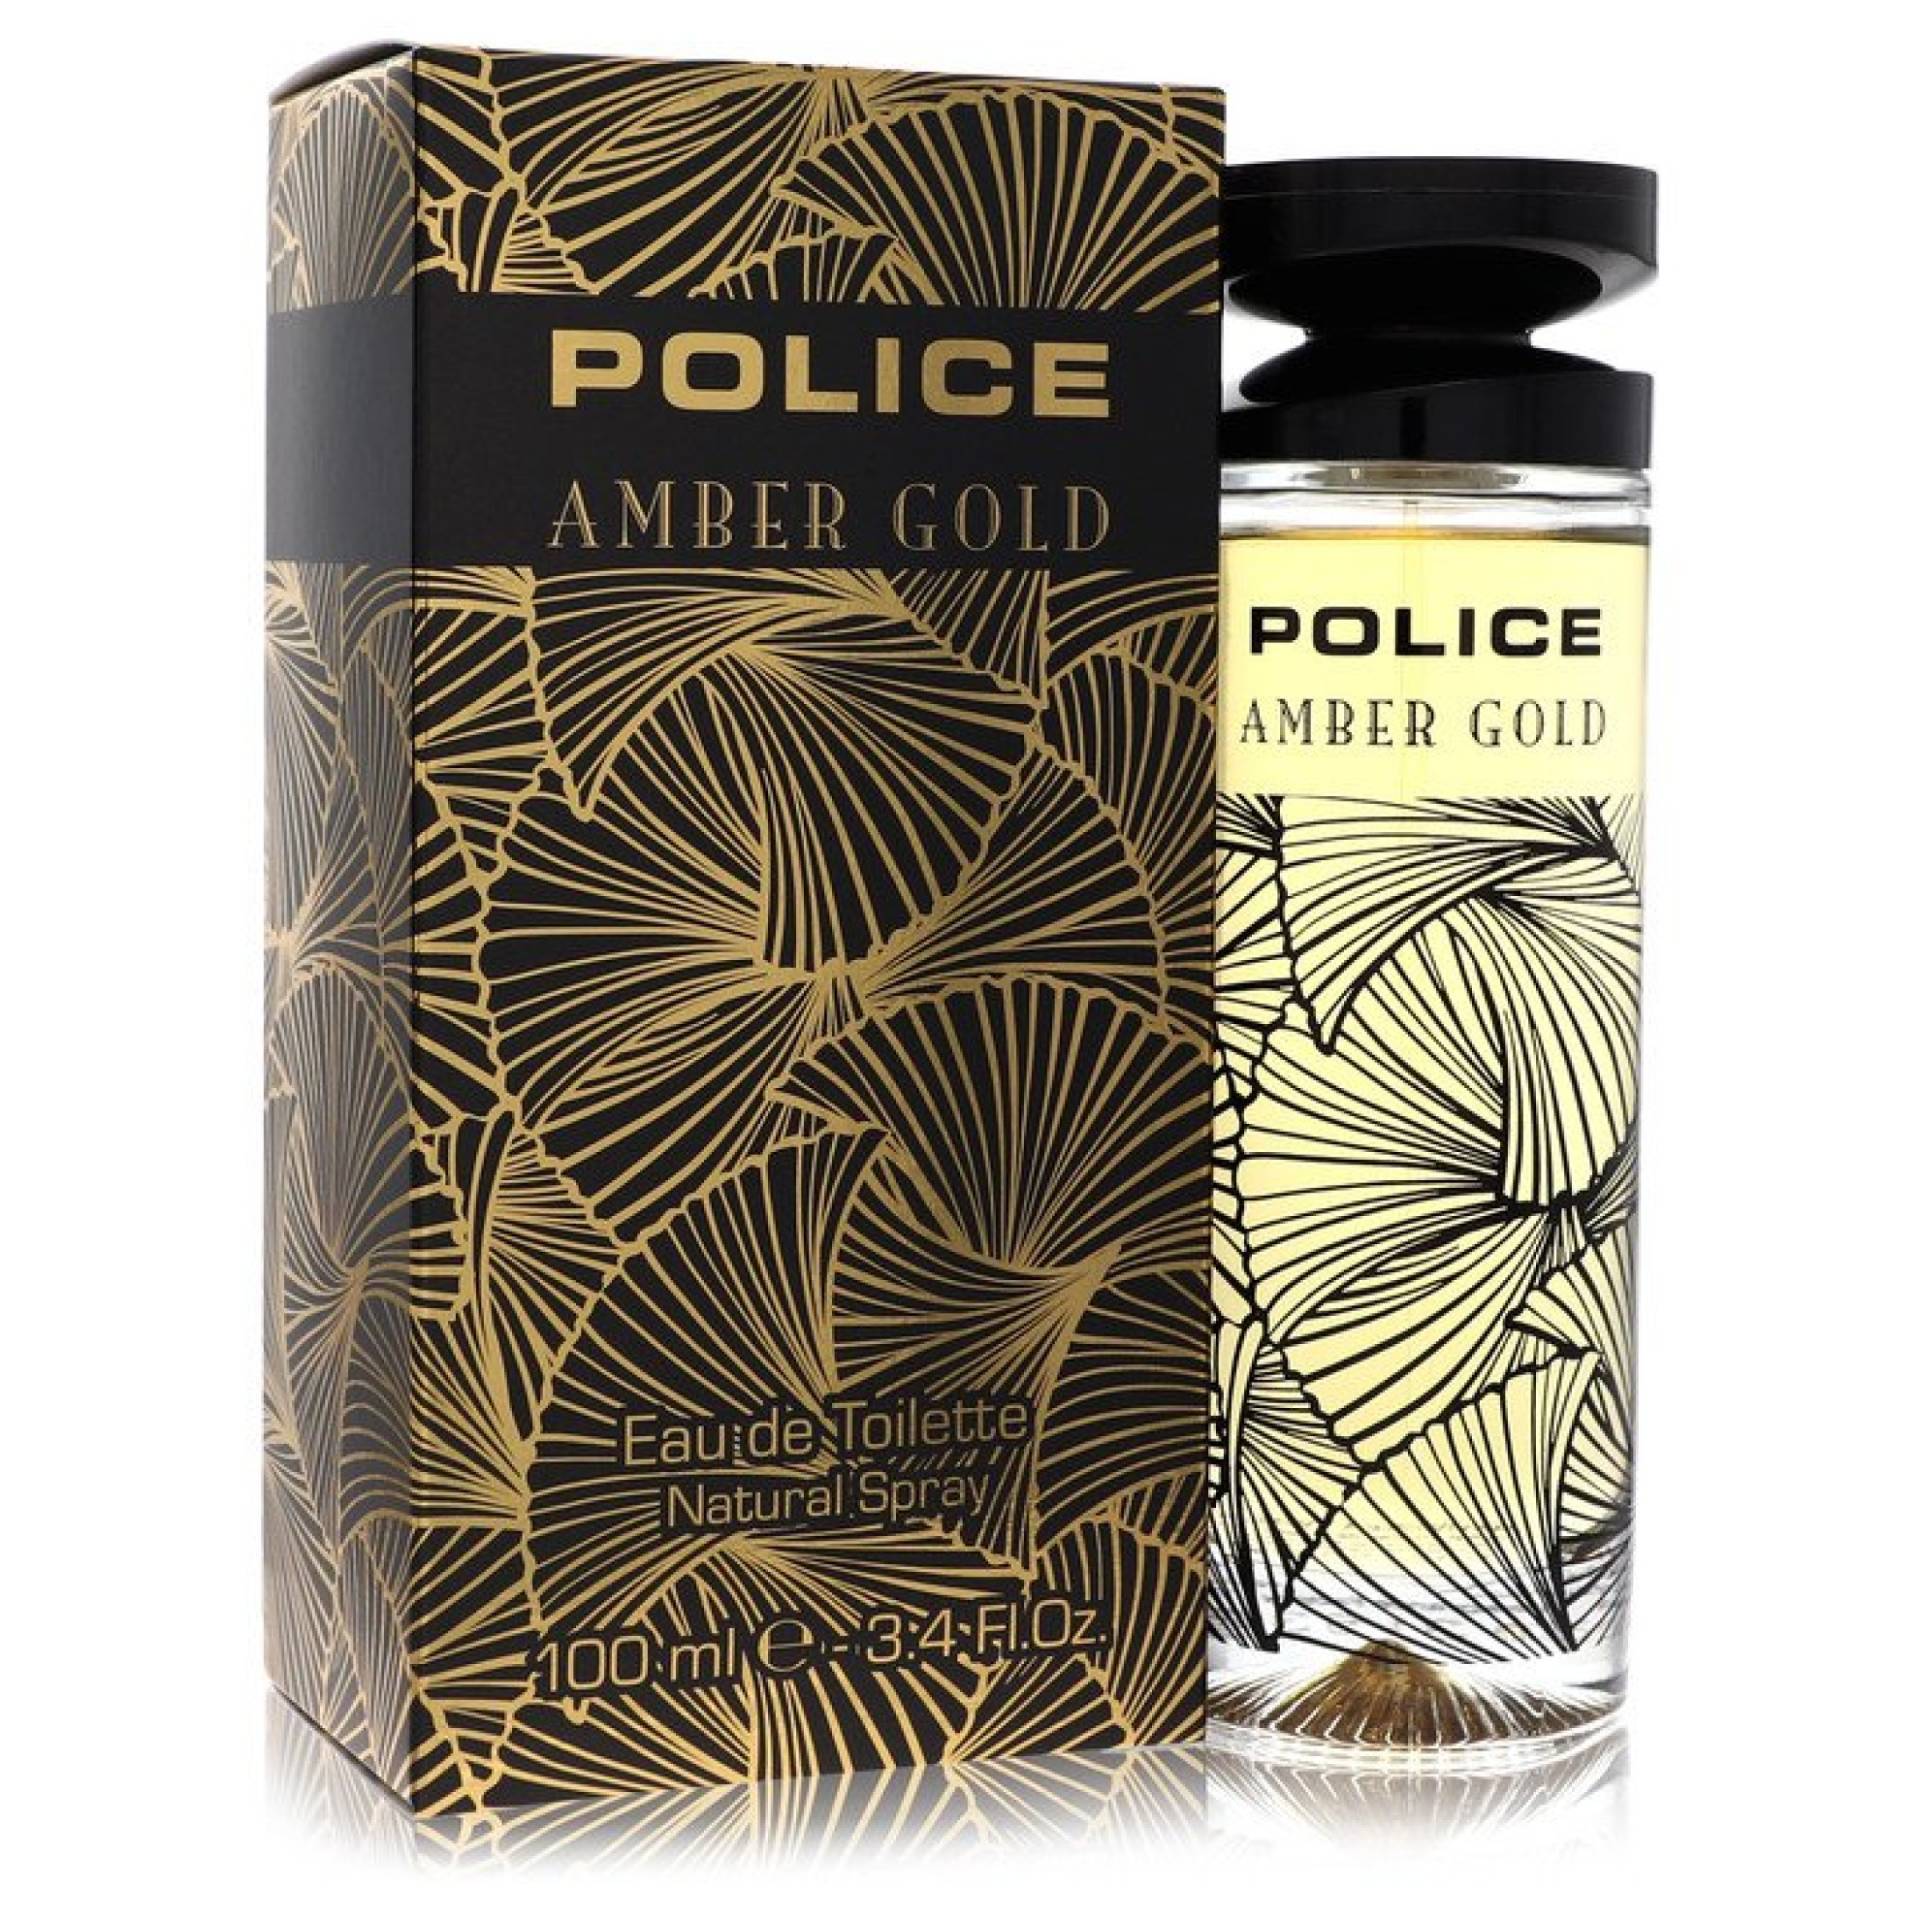 Police Colognes Police Amber Gold Eau De Toilette Spray 101 ml von Police Colognes